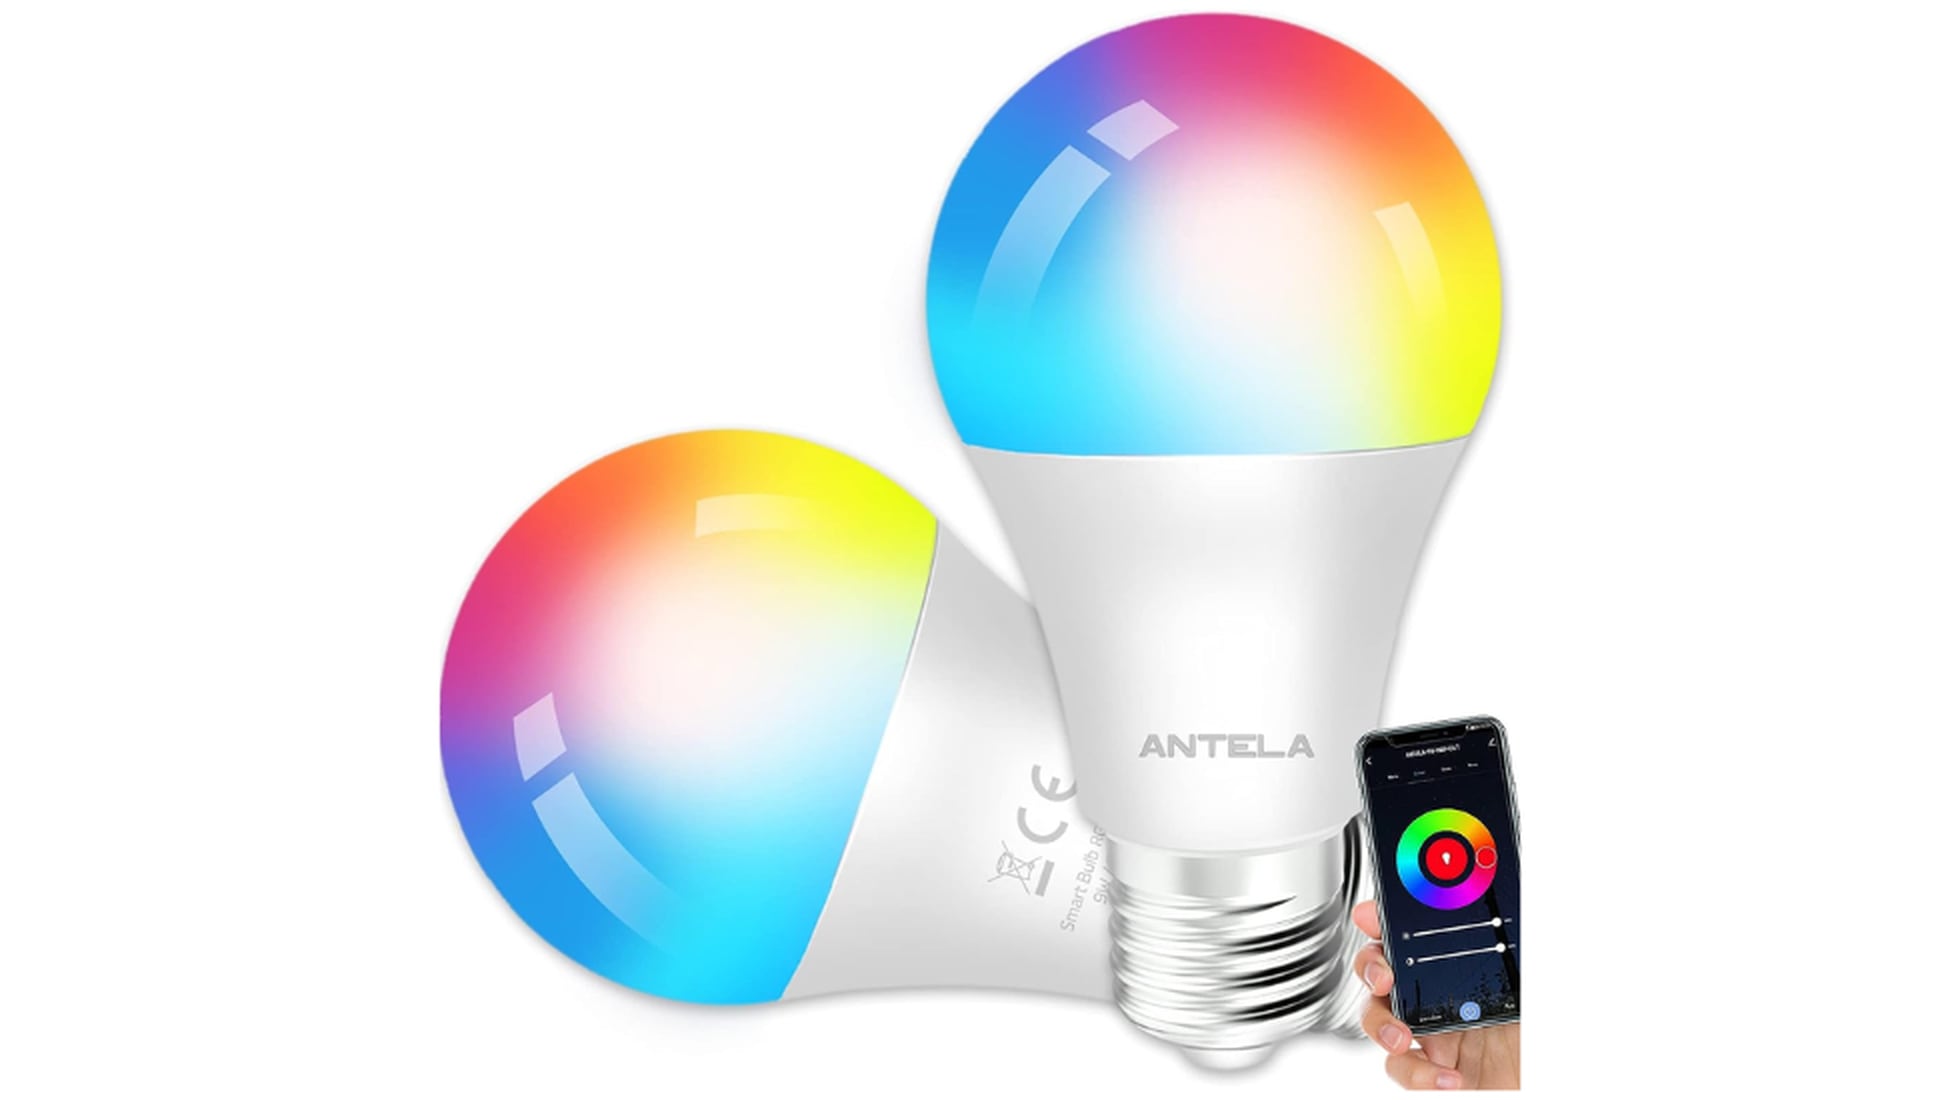 La bombilla Xiaomi Mi LED Smart Bulb con Wifi llega a España por 19,99€, Gadgets